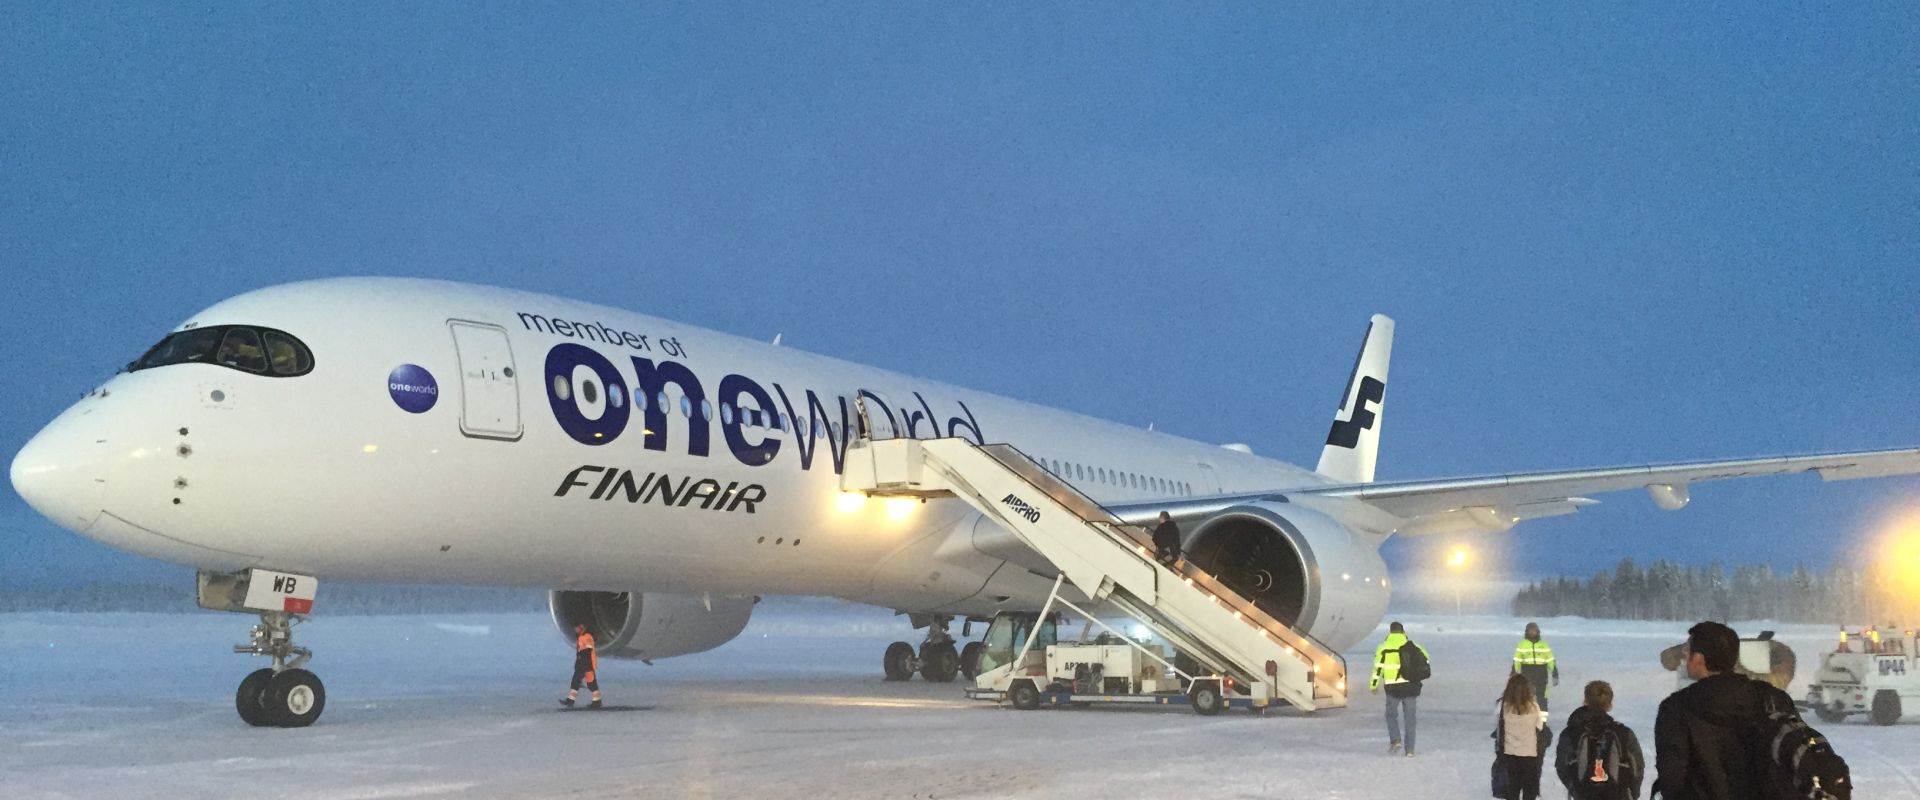 One World Finnair Kittila Finland